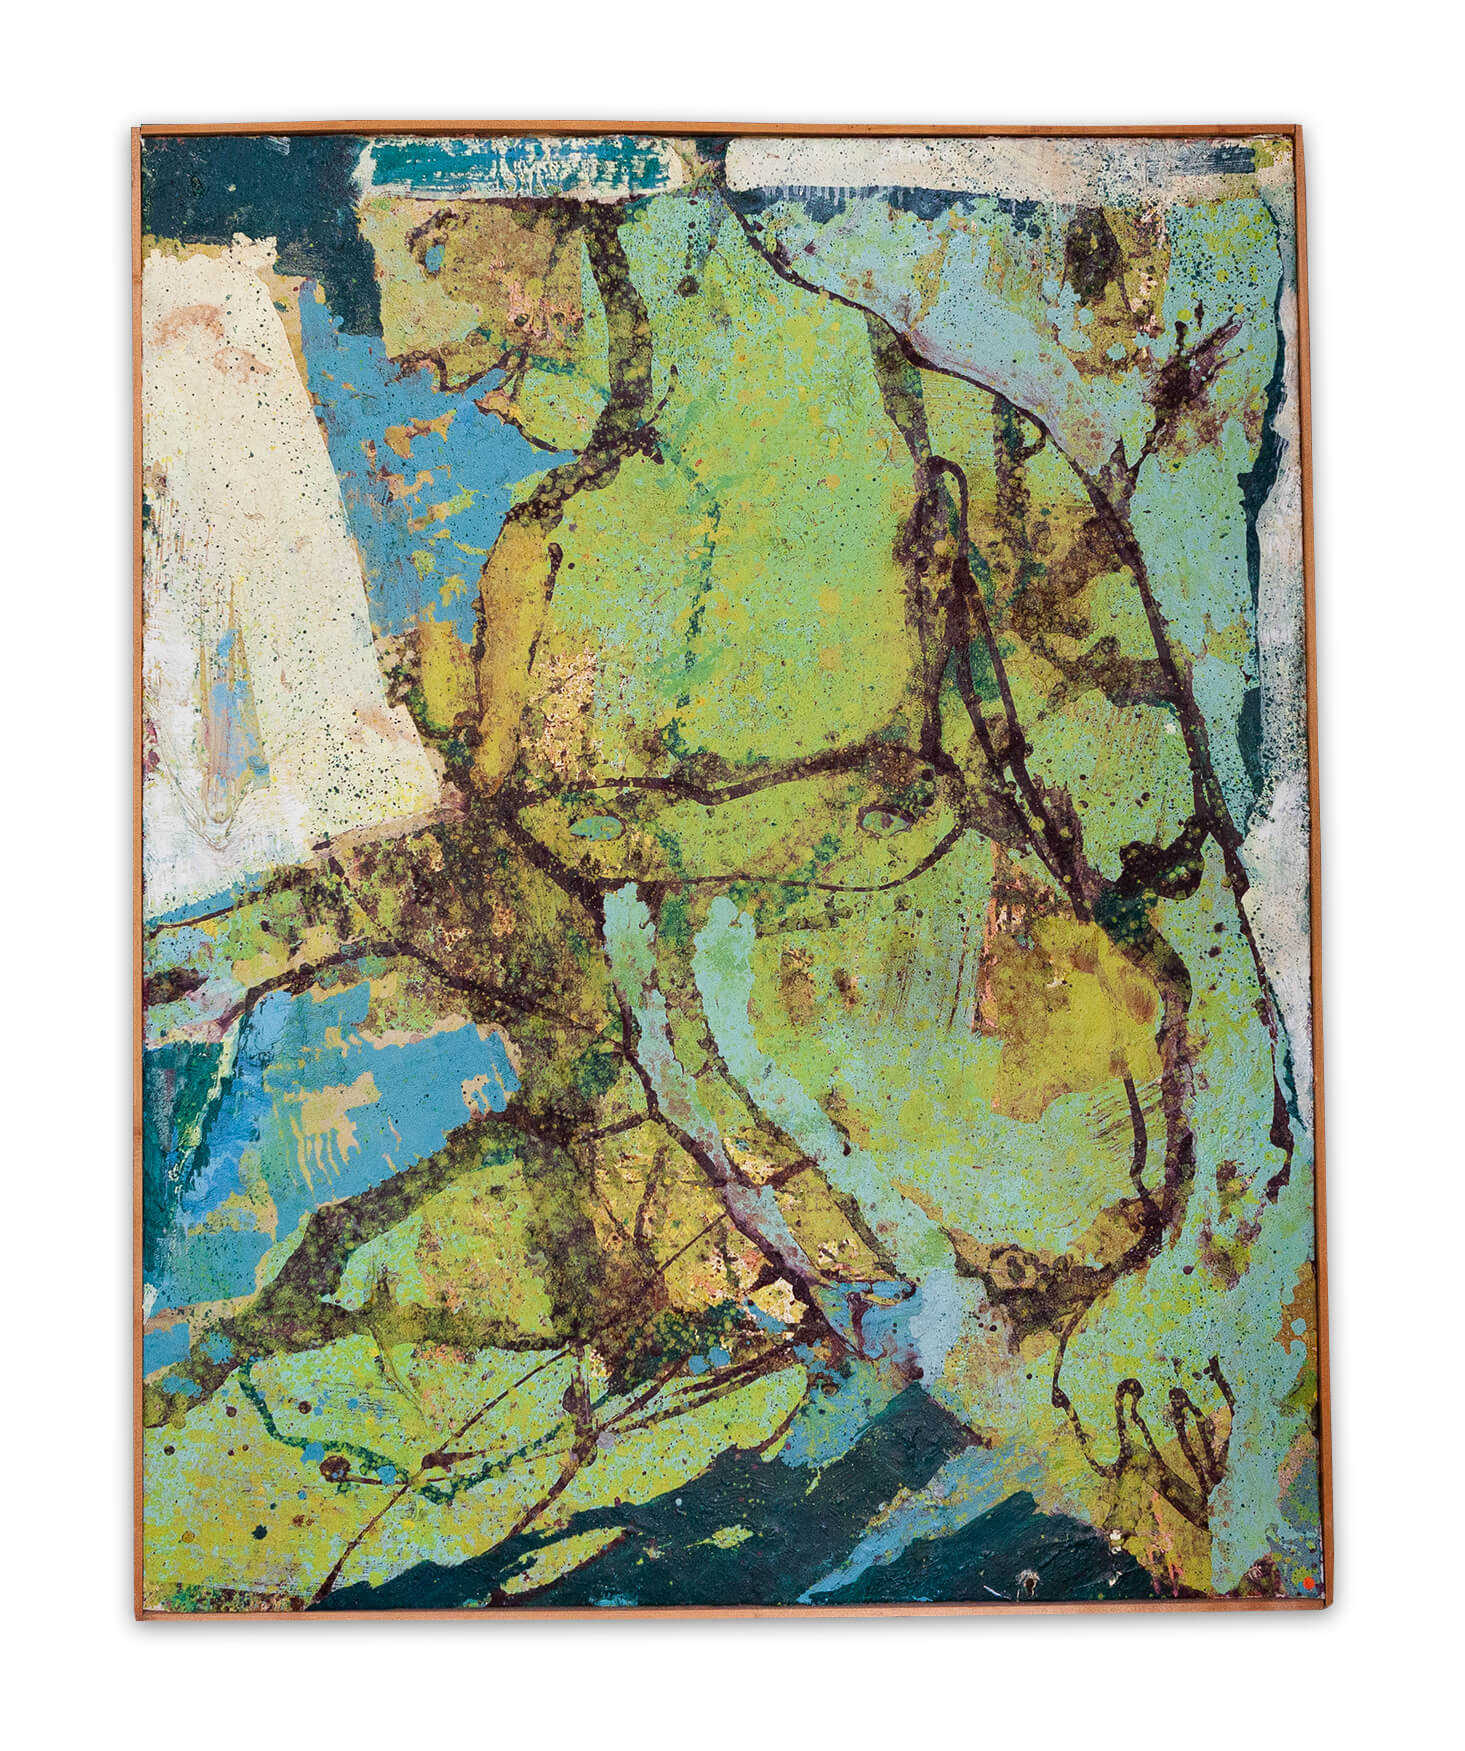 Poek in Antibes - oil paint - 1995 - 1.14m x 0.90m